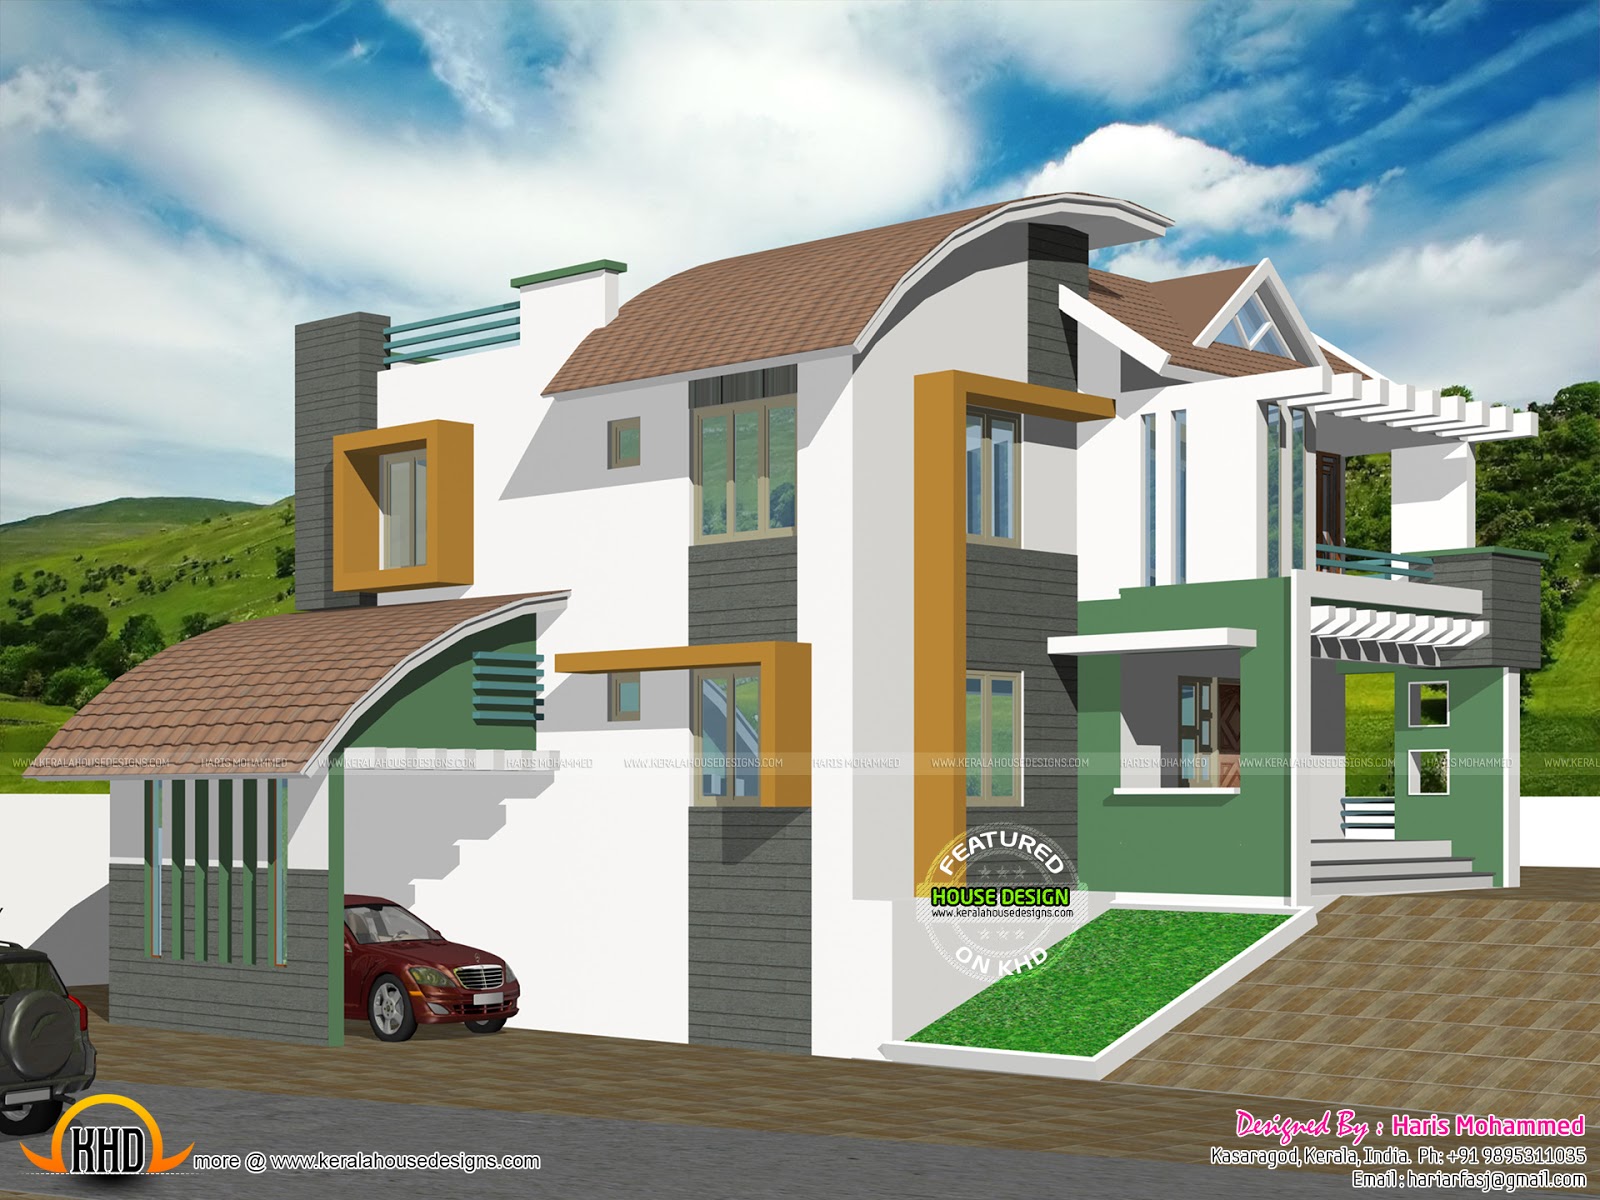  Contemporary  hillside  house  Kerala home  design  and floor 